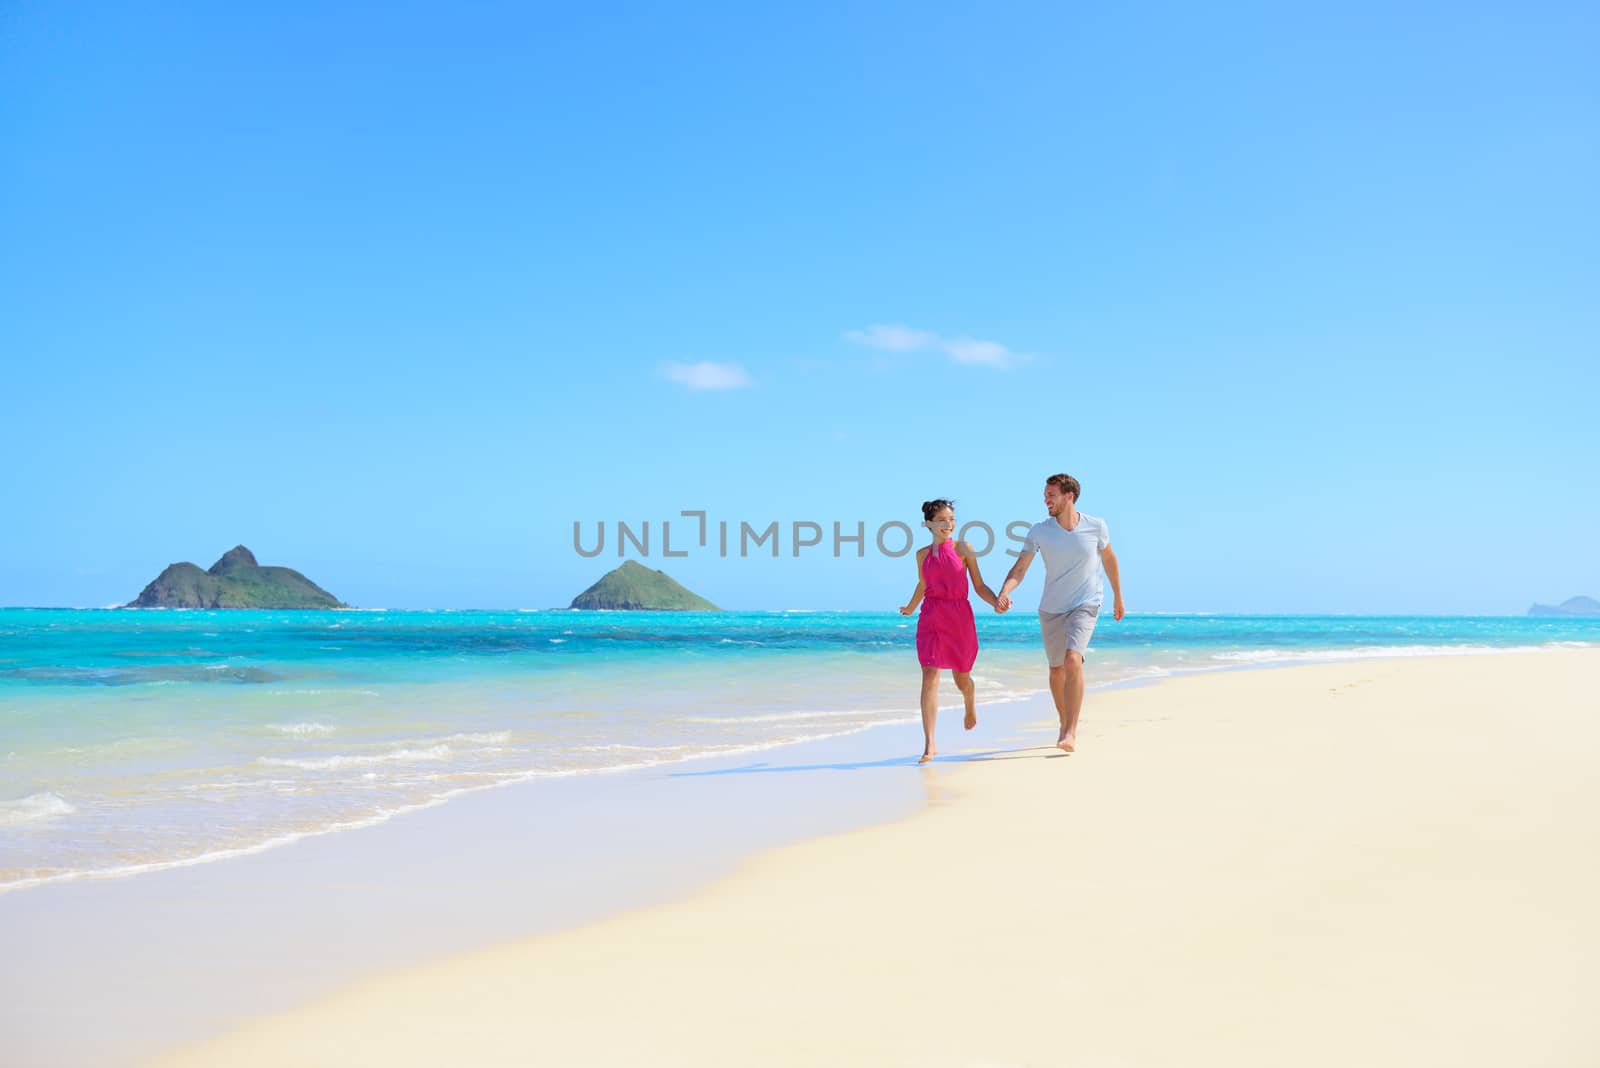 Beach couple happy having fun on Hawaii honeymoon by Maridav